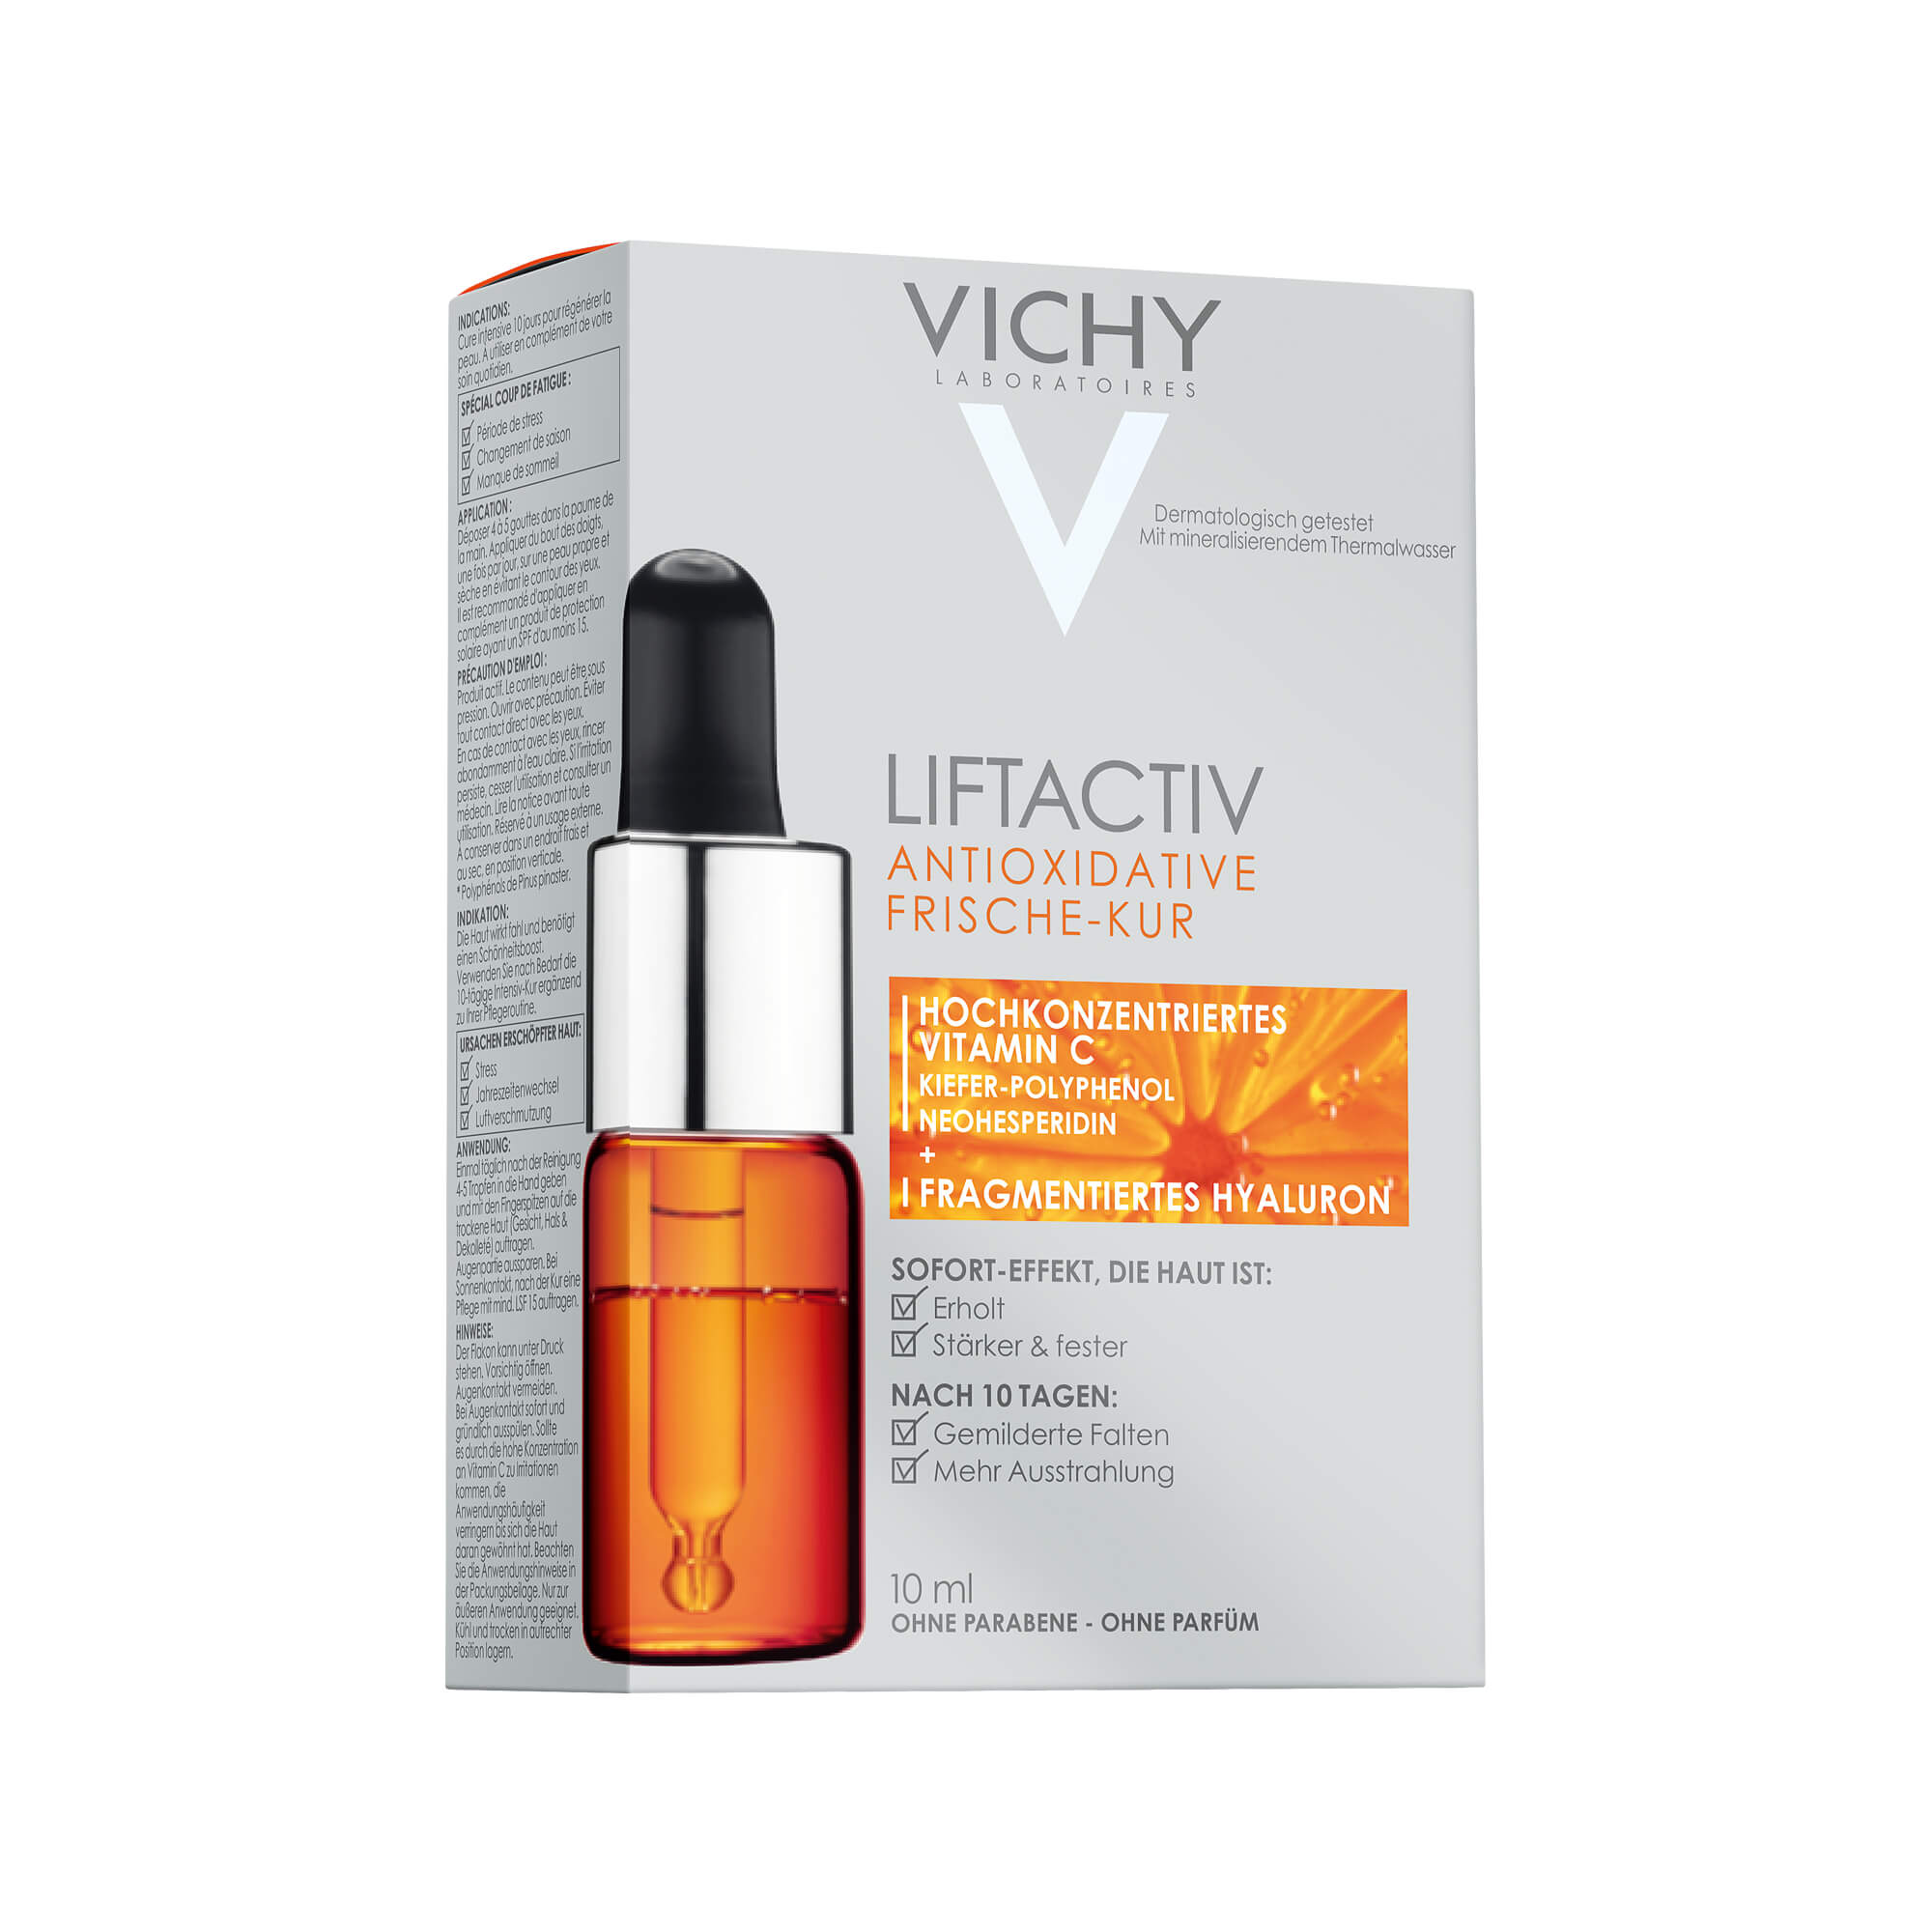 Vichy Liftactiv Antioxidative Frische-Kur Verpackung